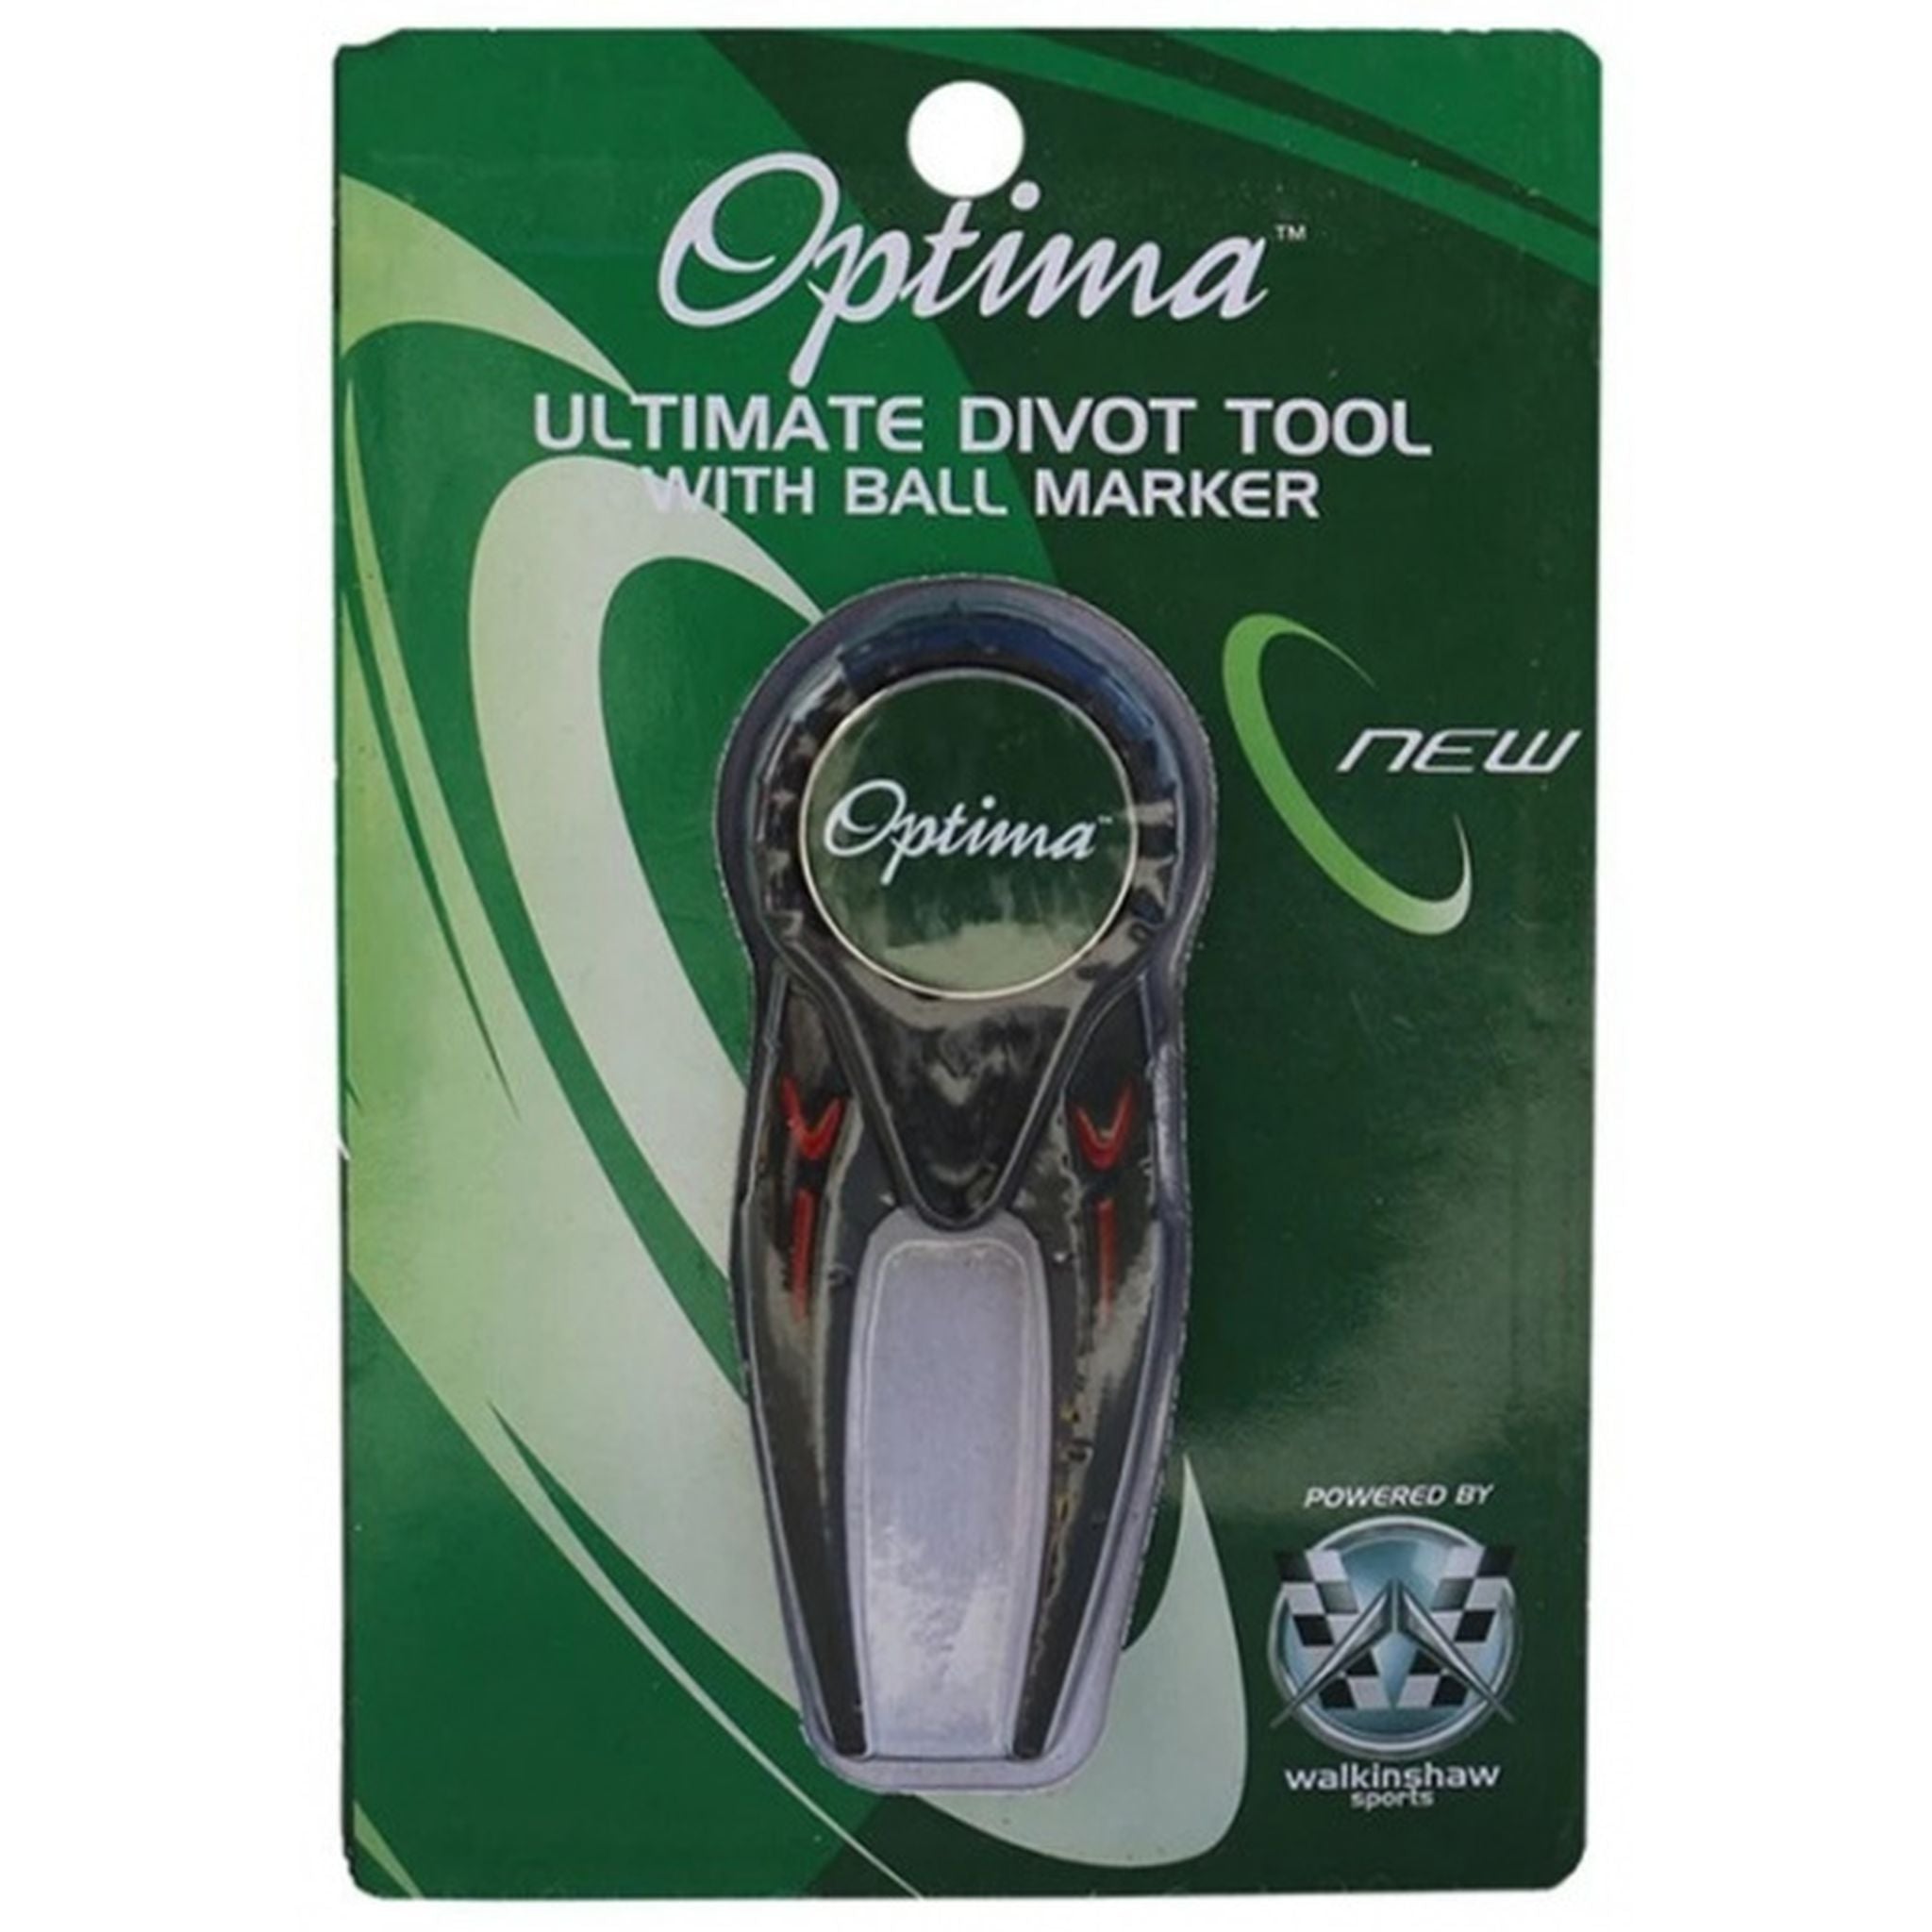 Optima Divot Tool with Ball Marker